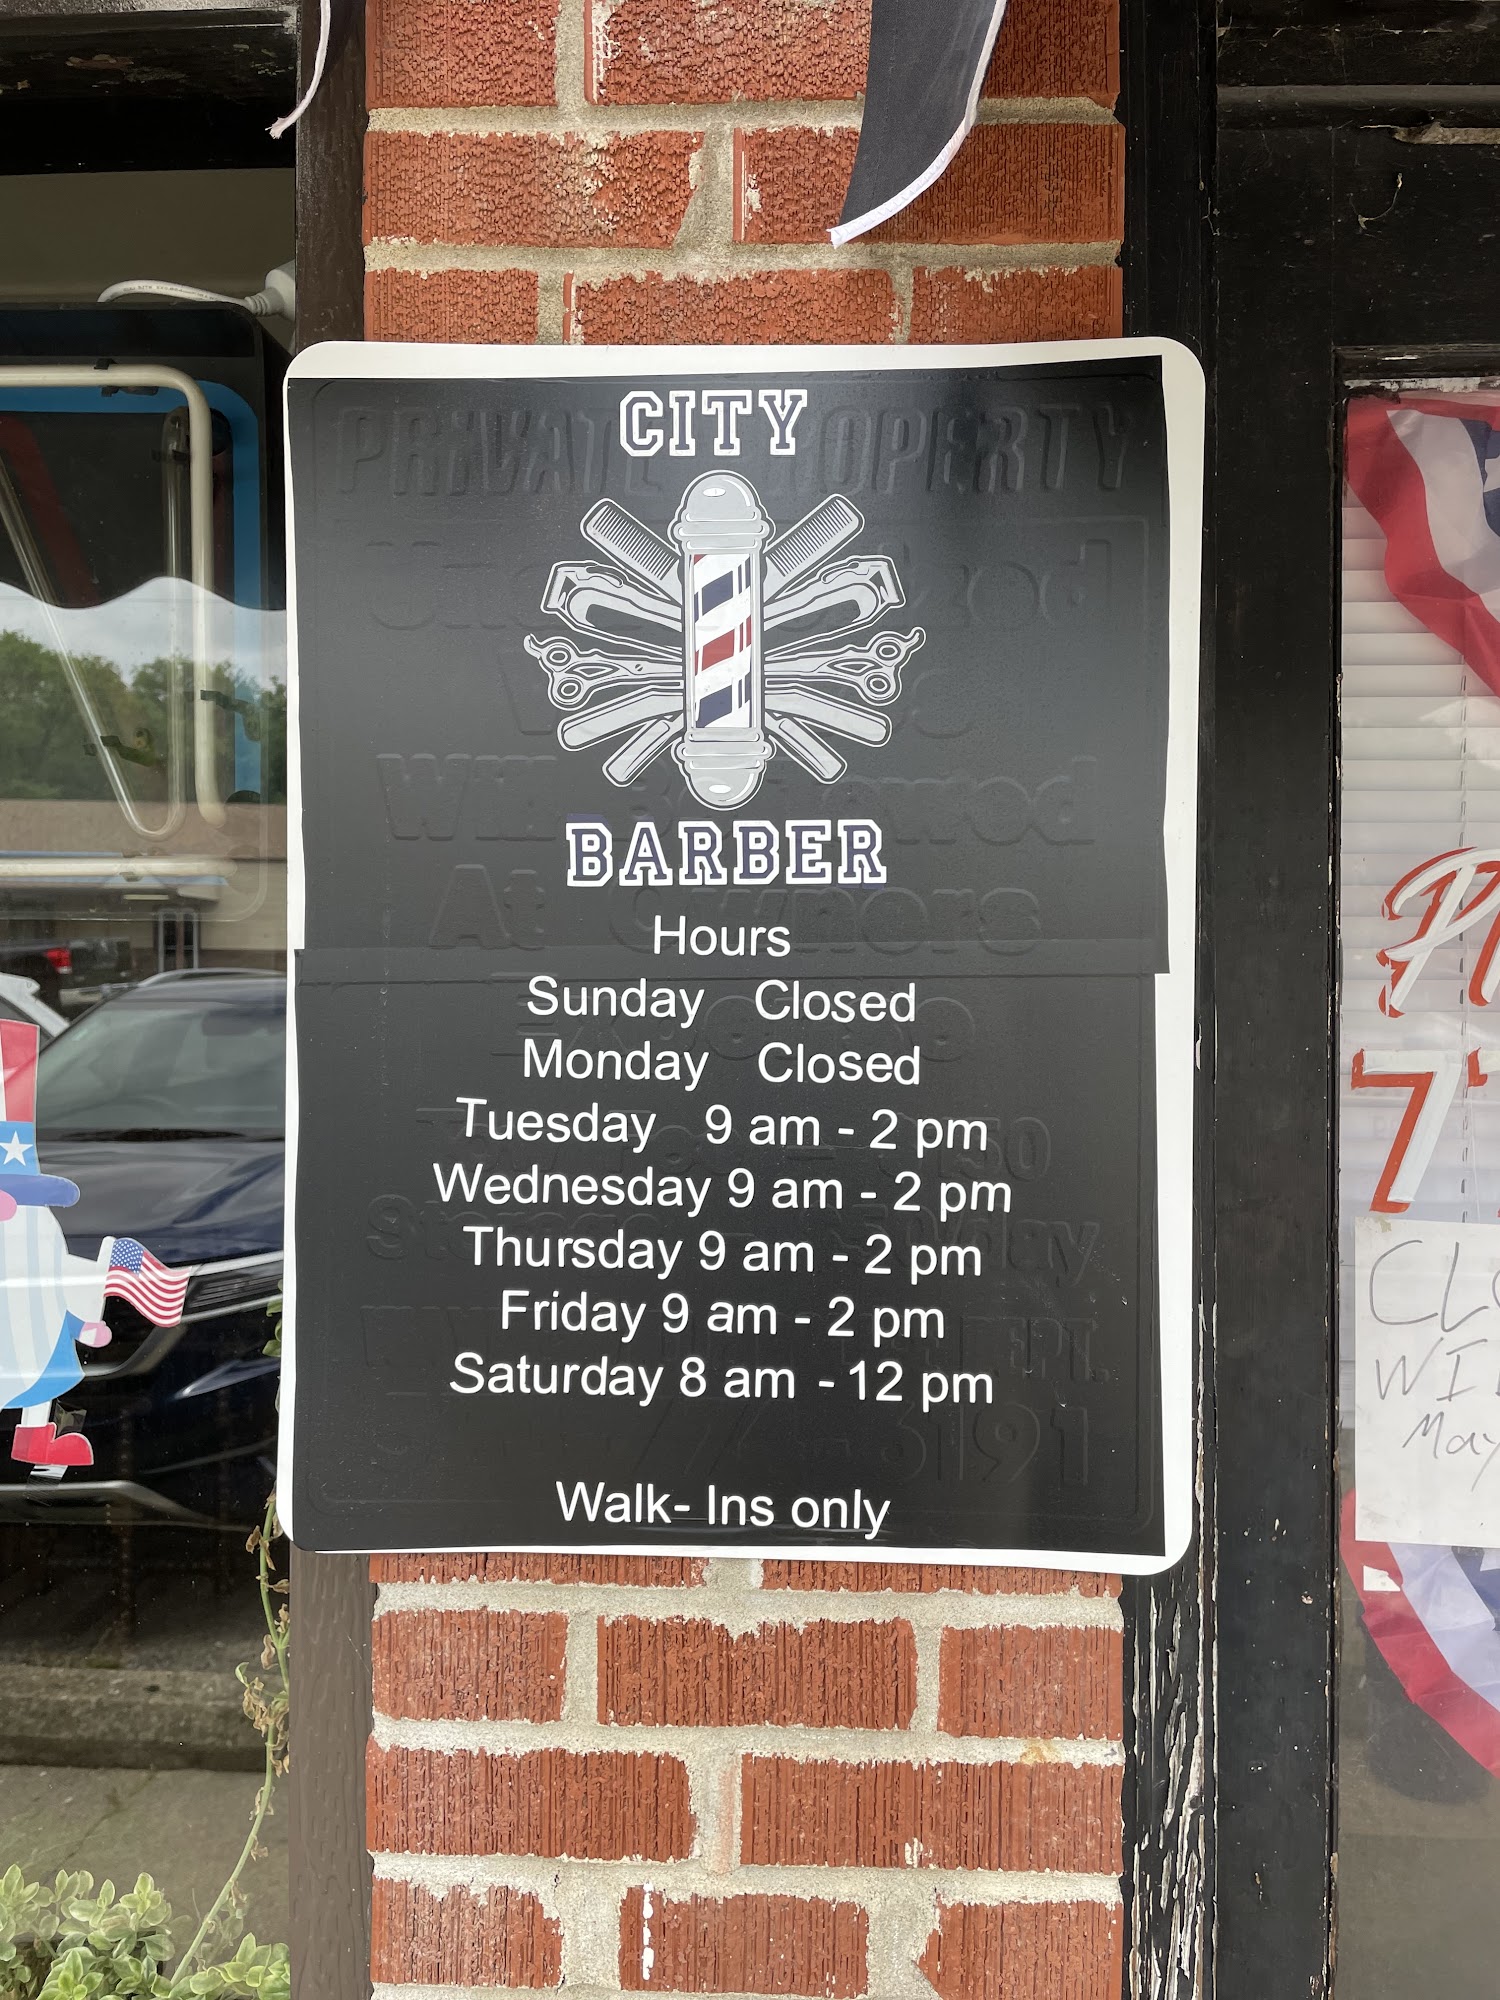 City Barber Shop 309 U.S. Rt. 66 W, Waynesville Missouri 65583